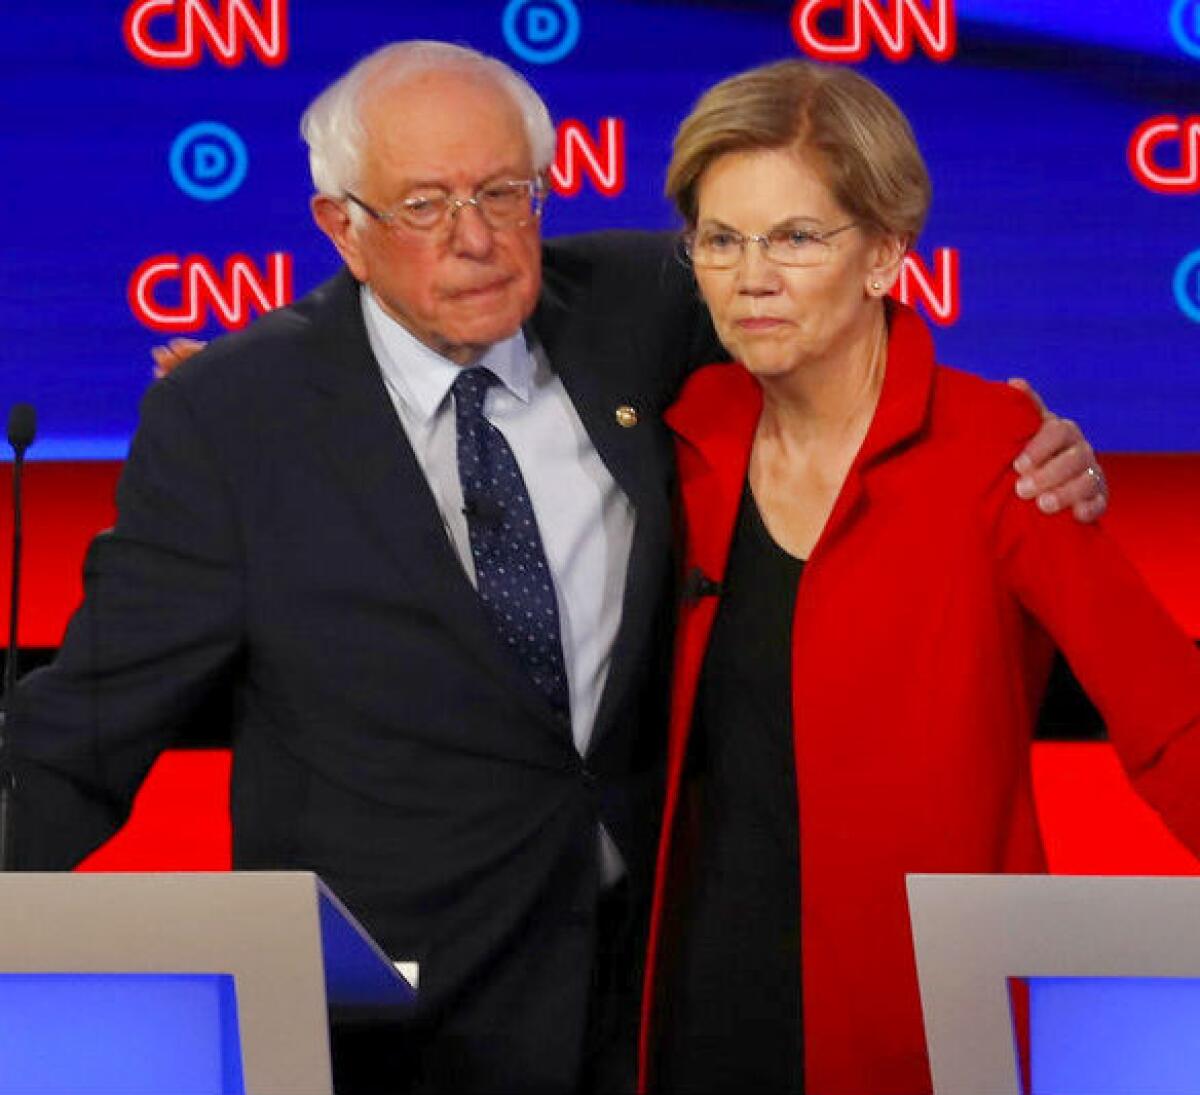 Sens. Bernie Sanders and Elizabeth Warren